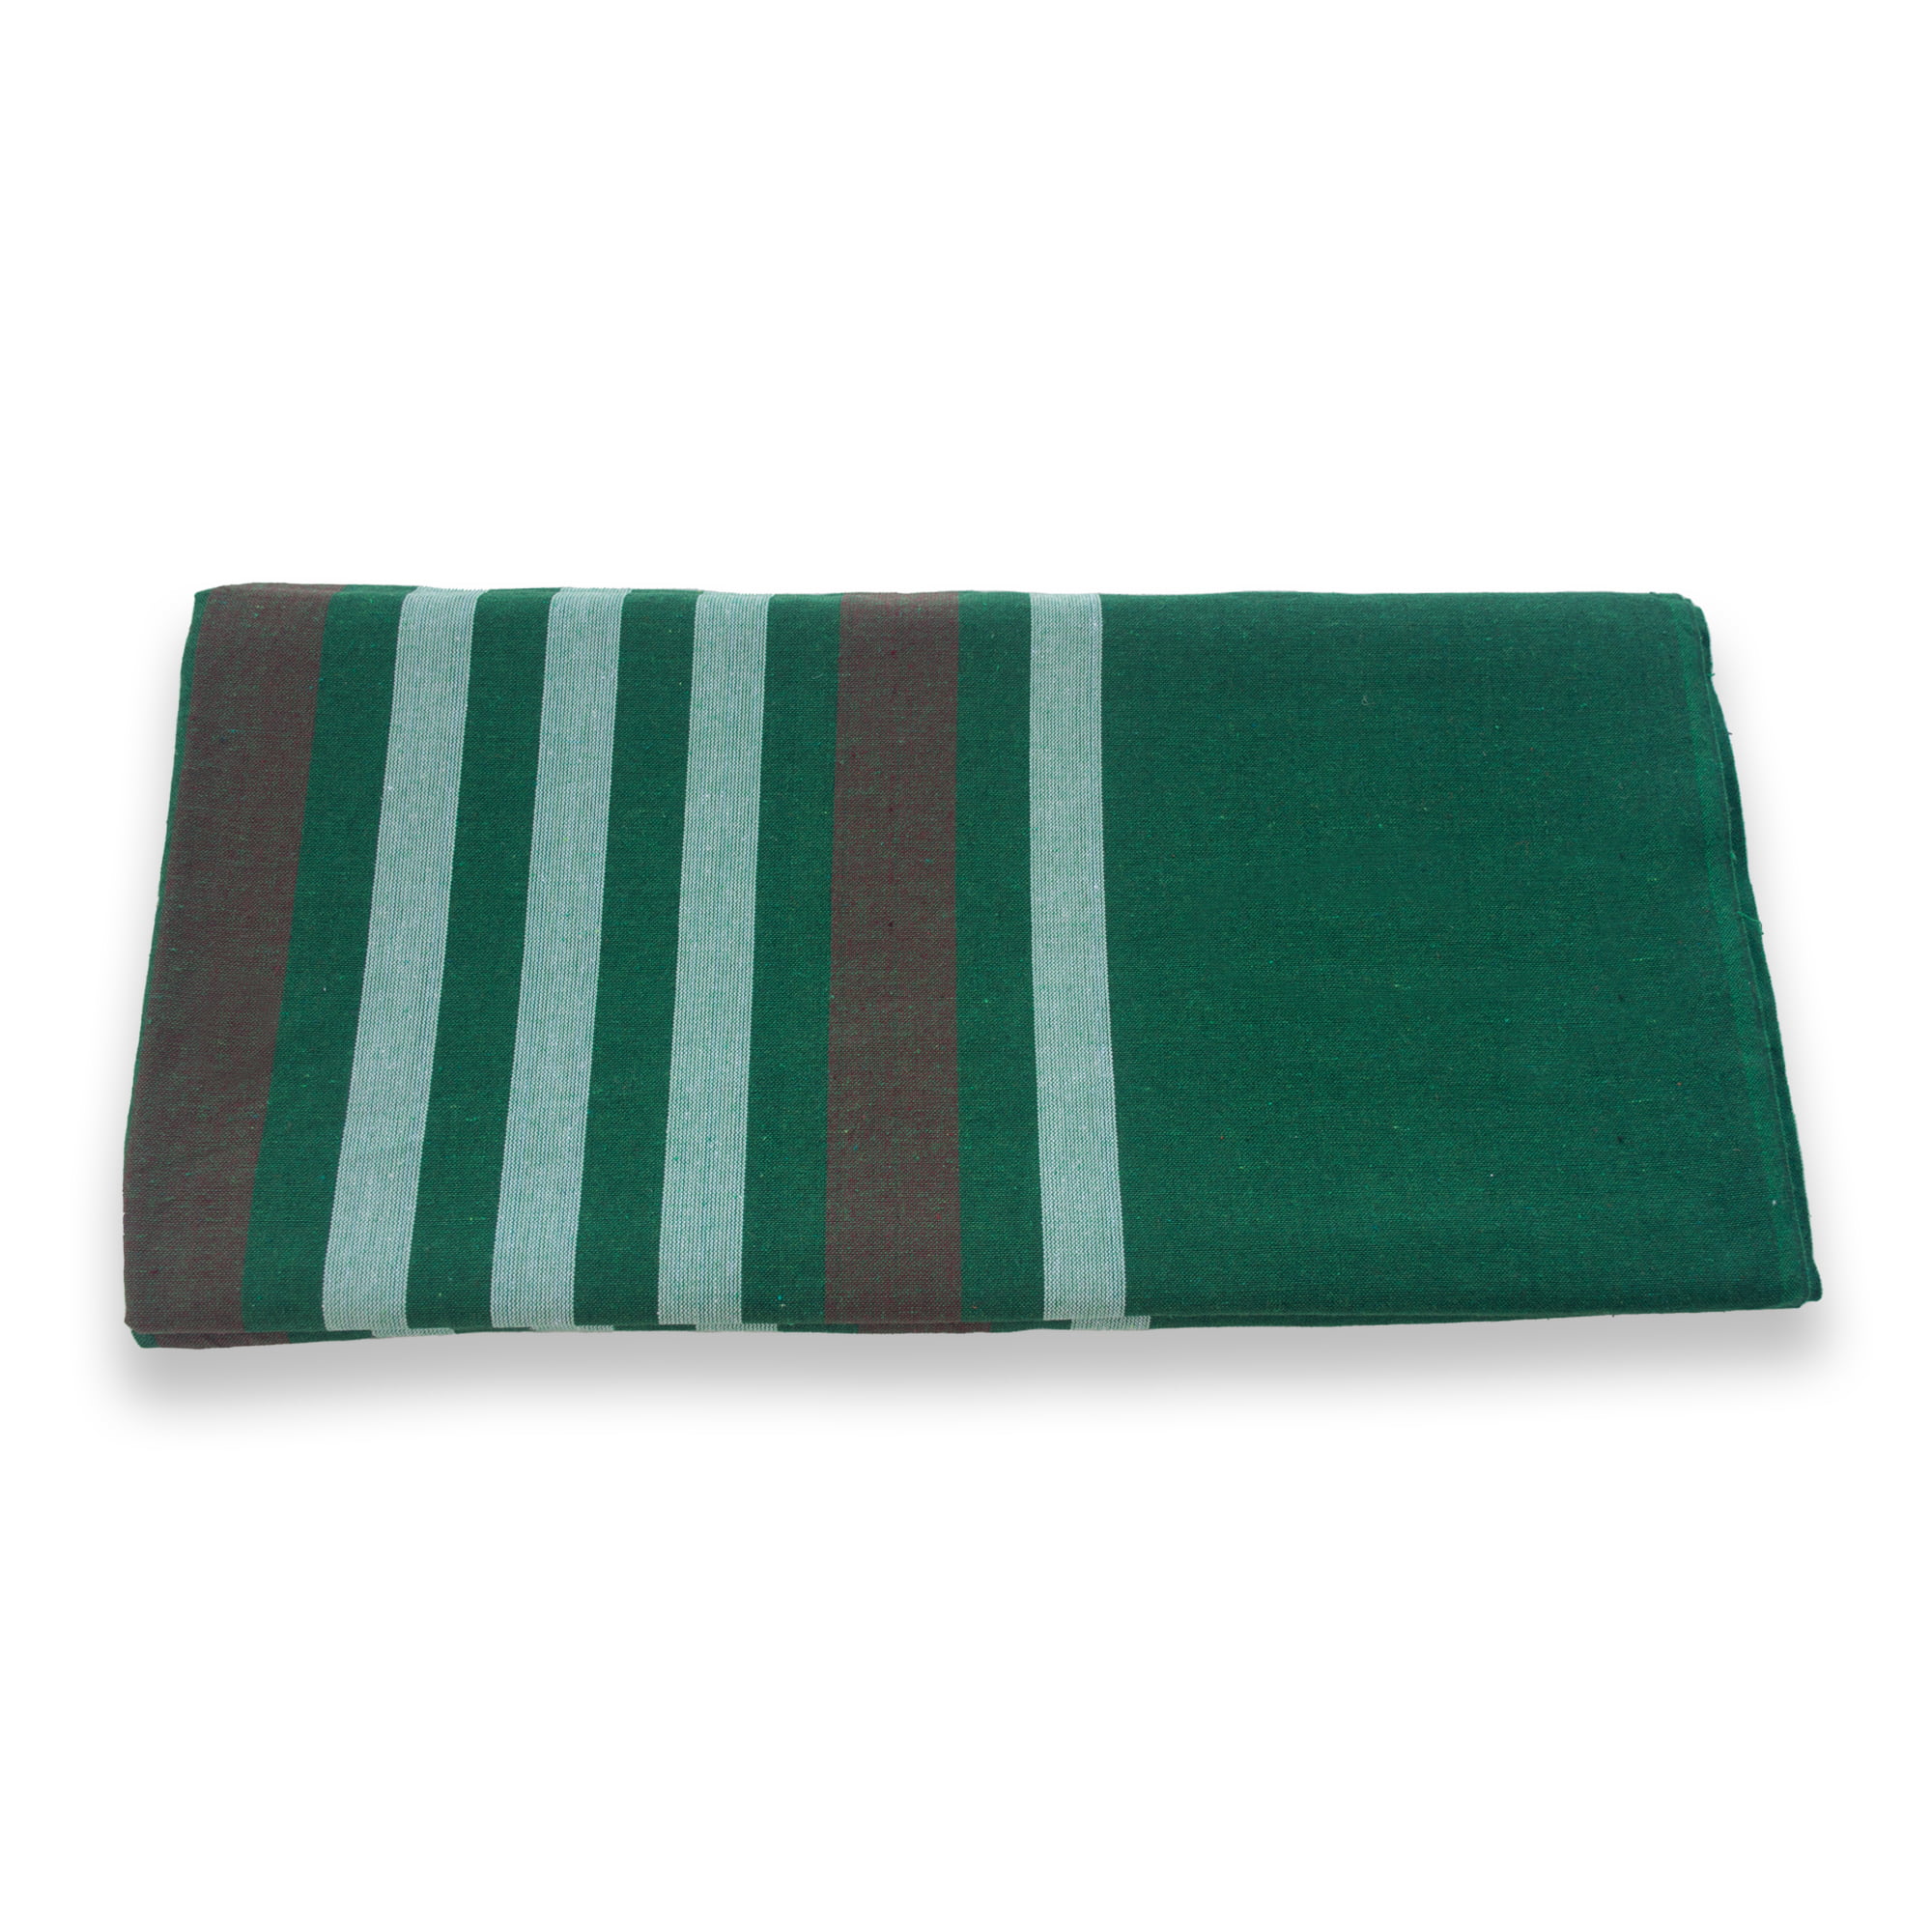 90x90 Green & Brown Bed Sheet